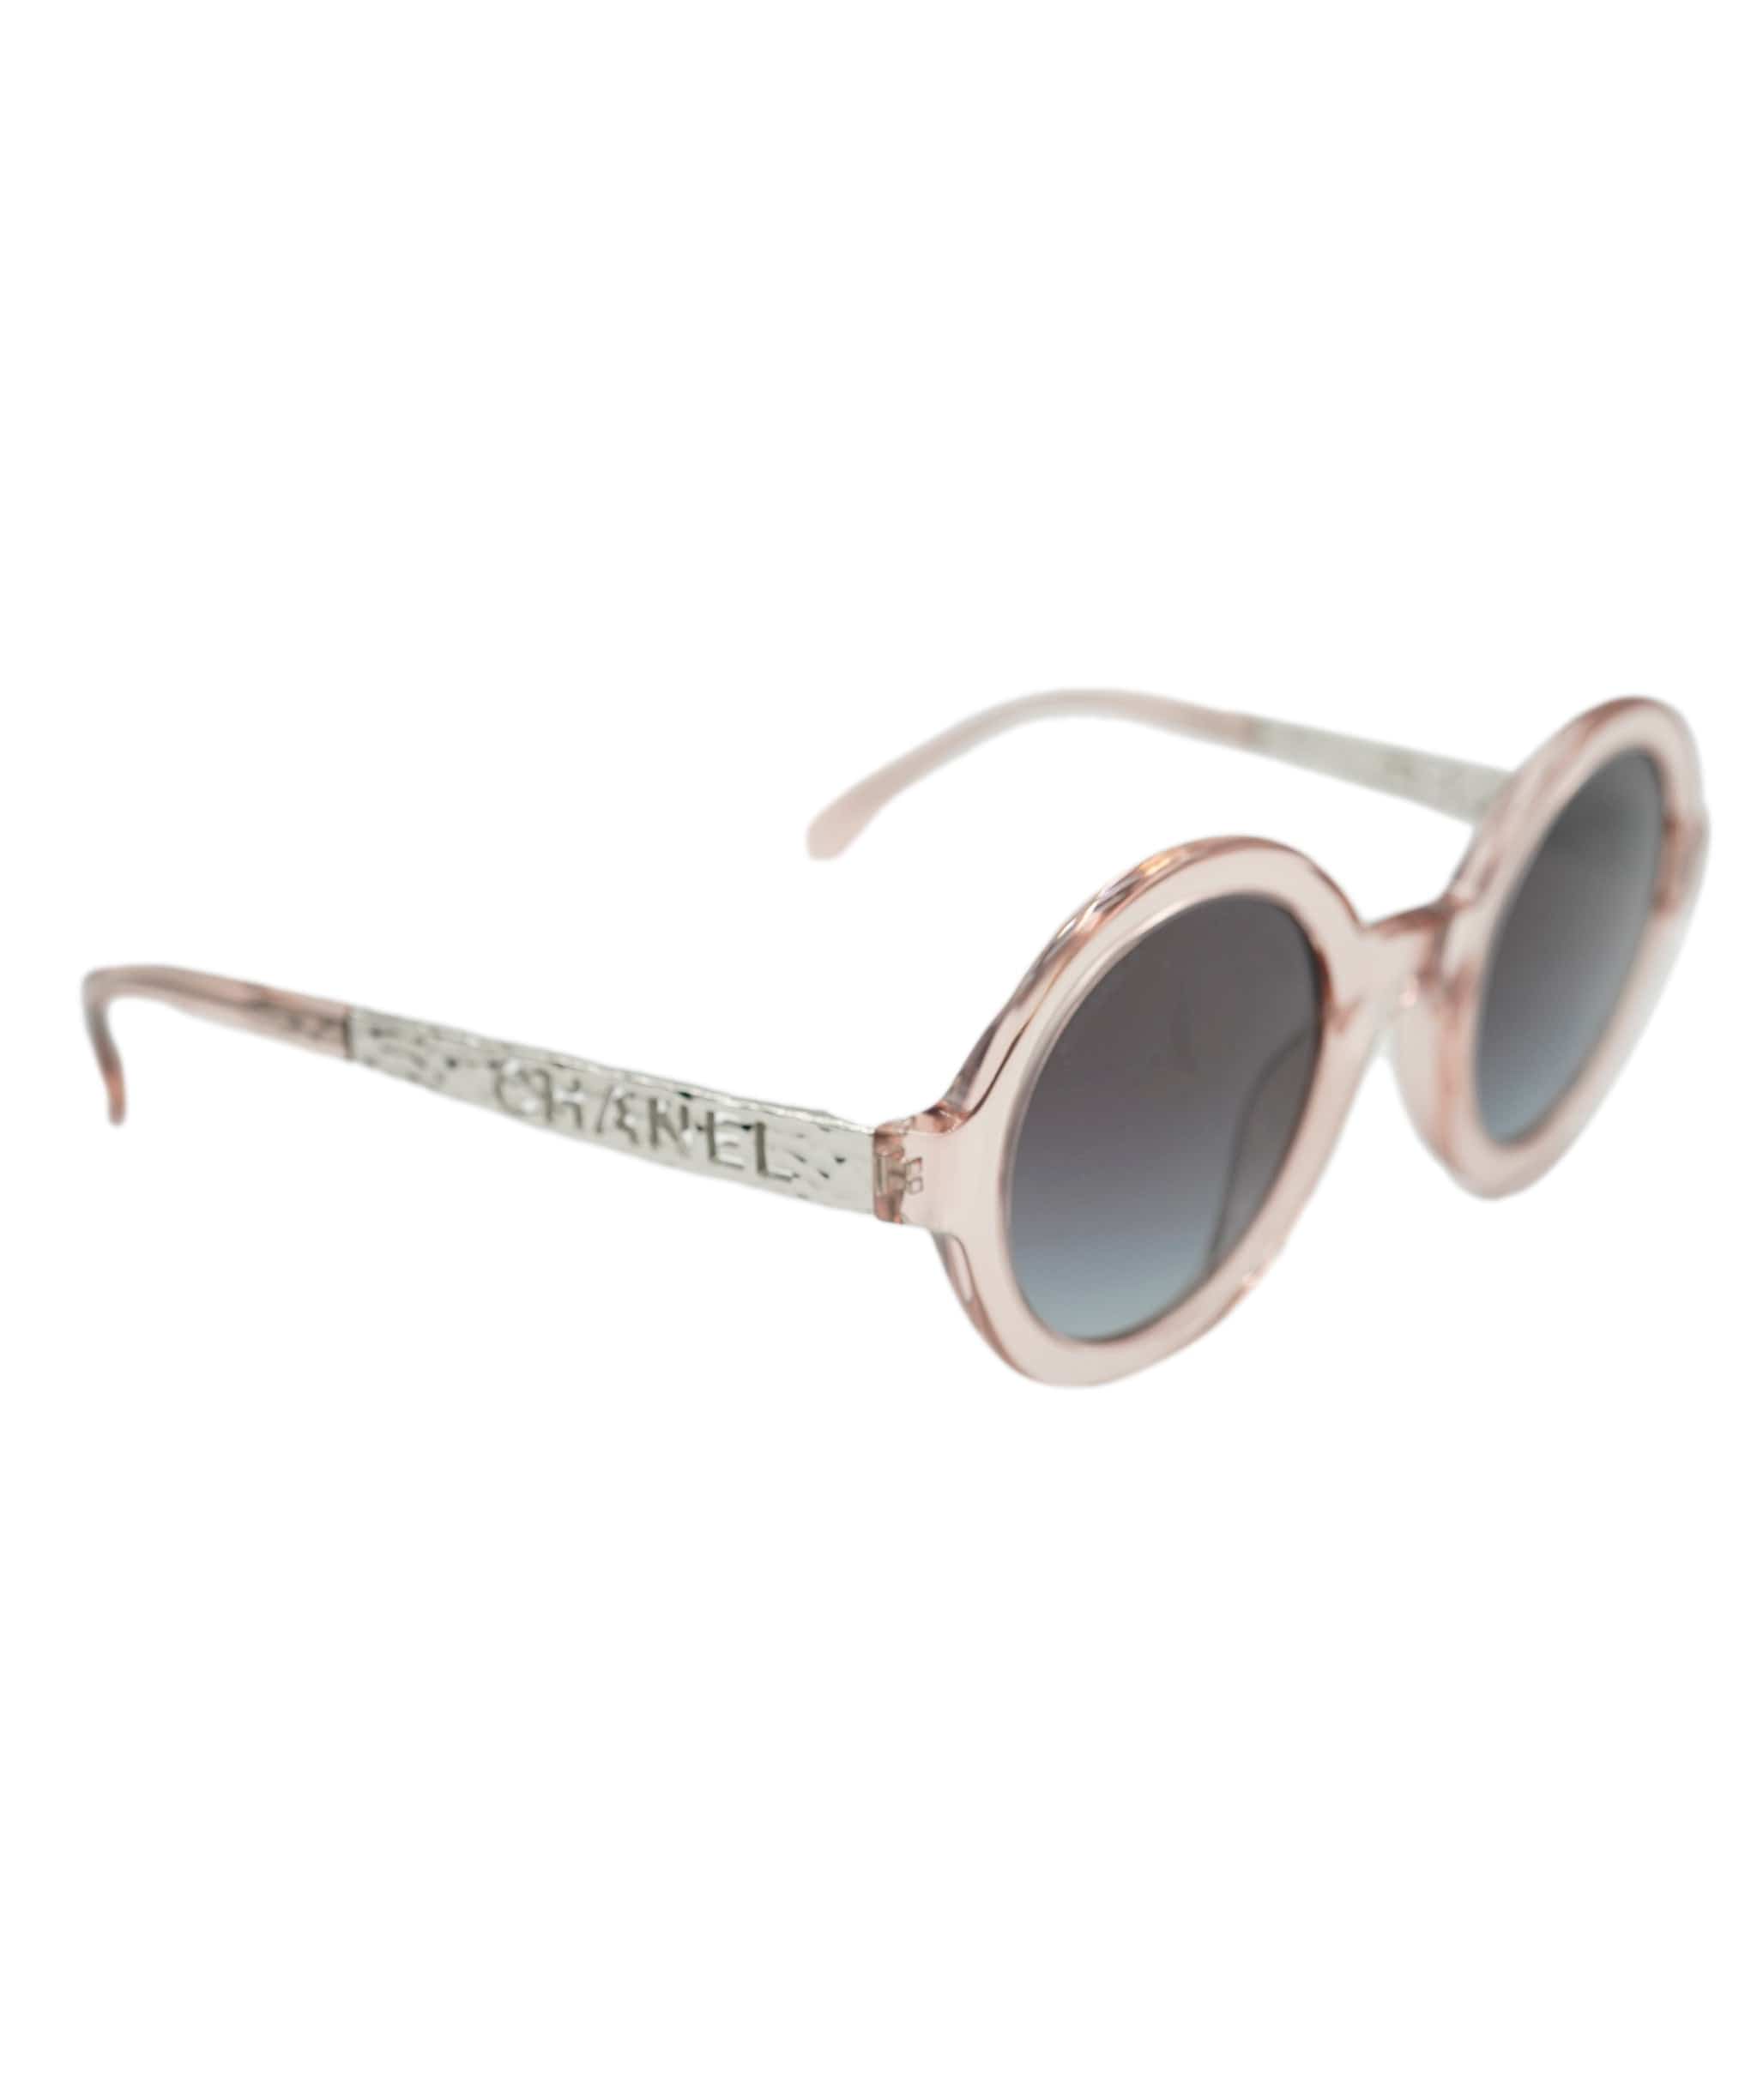 Chanel Pink Chanel sunglasses ALC0541